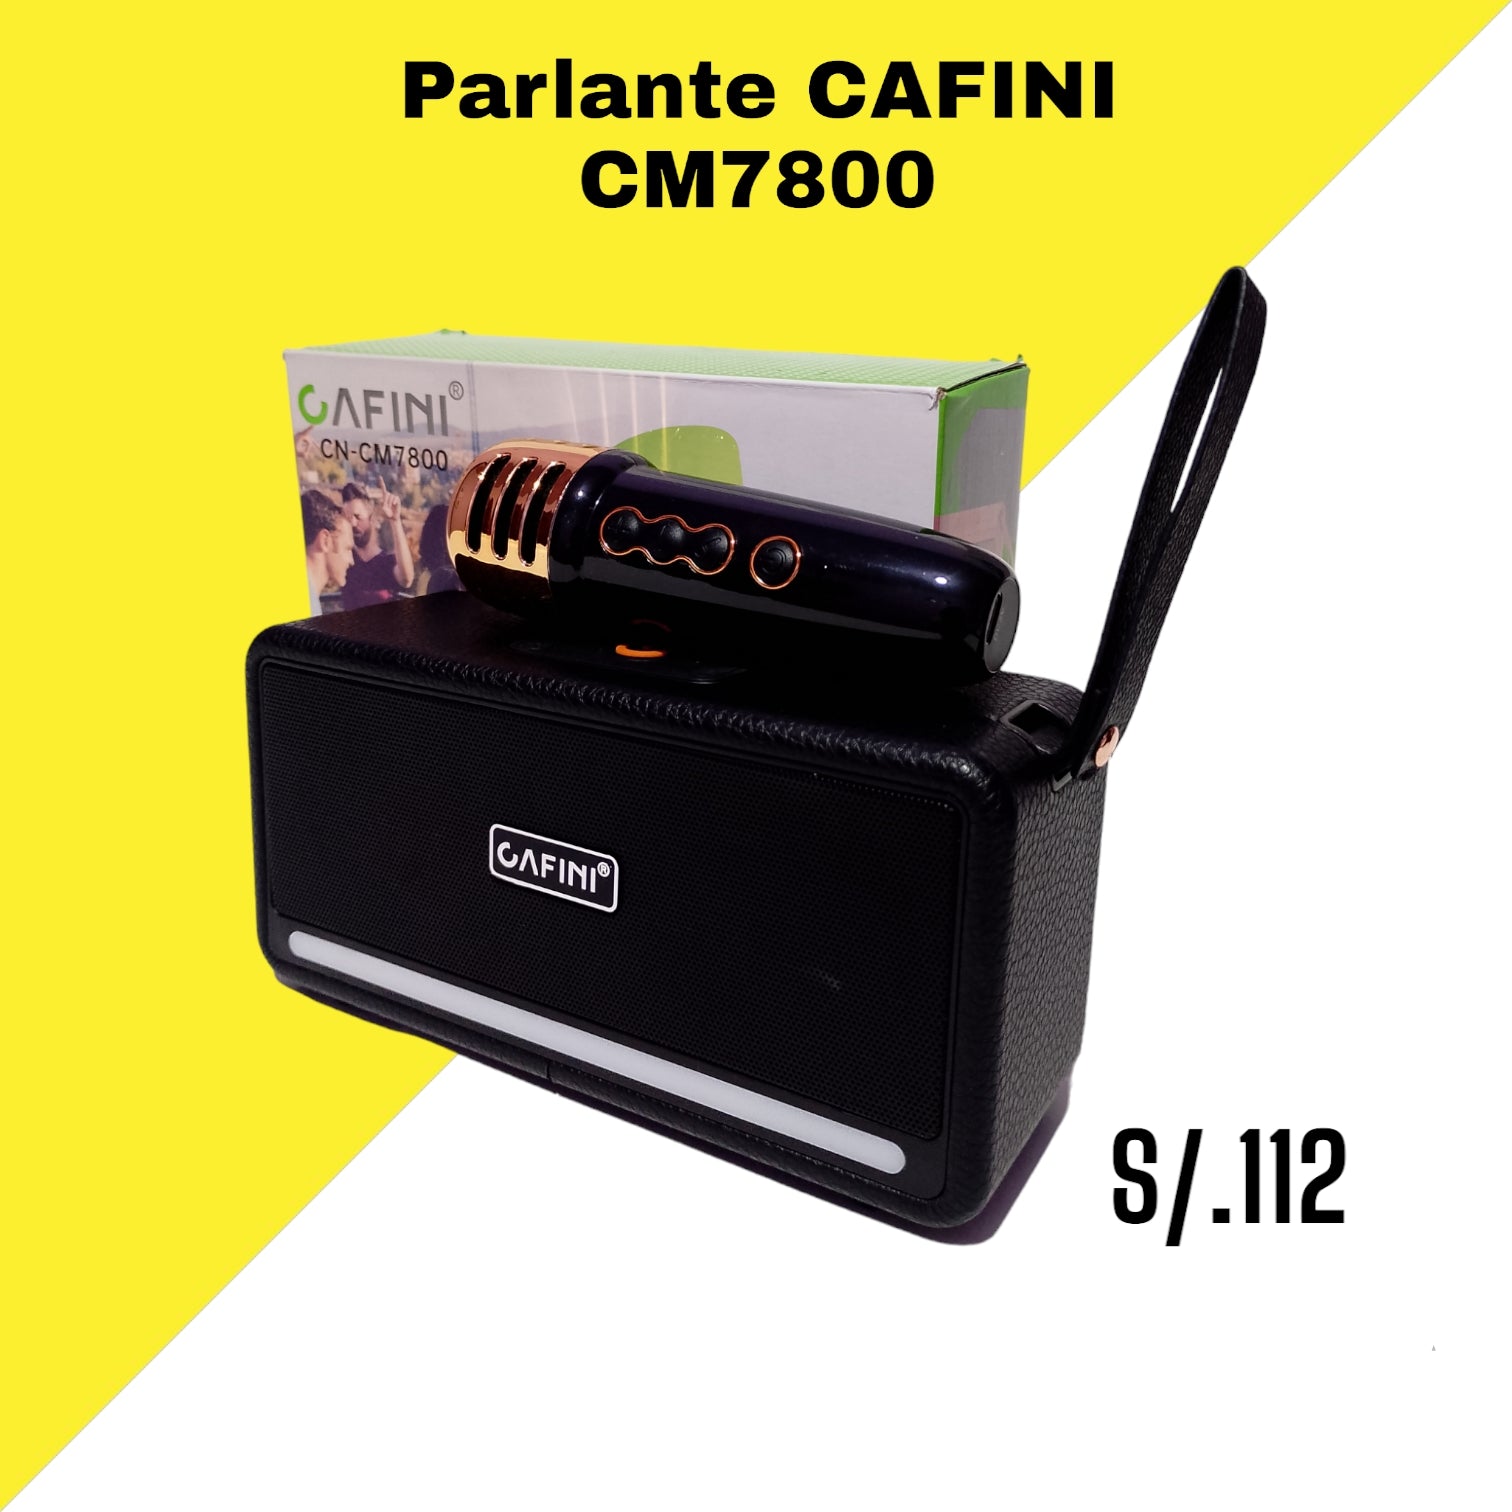 PARLANTE CAFINI CN-CM7800 (KARAOKE)